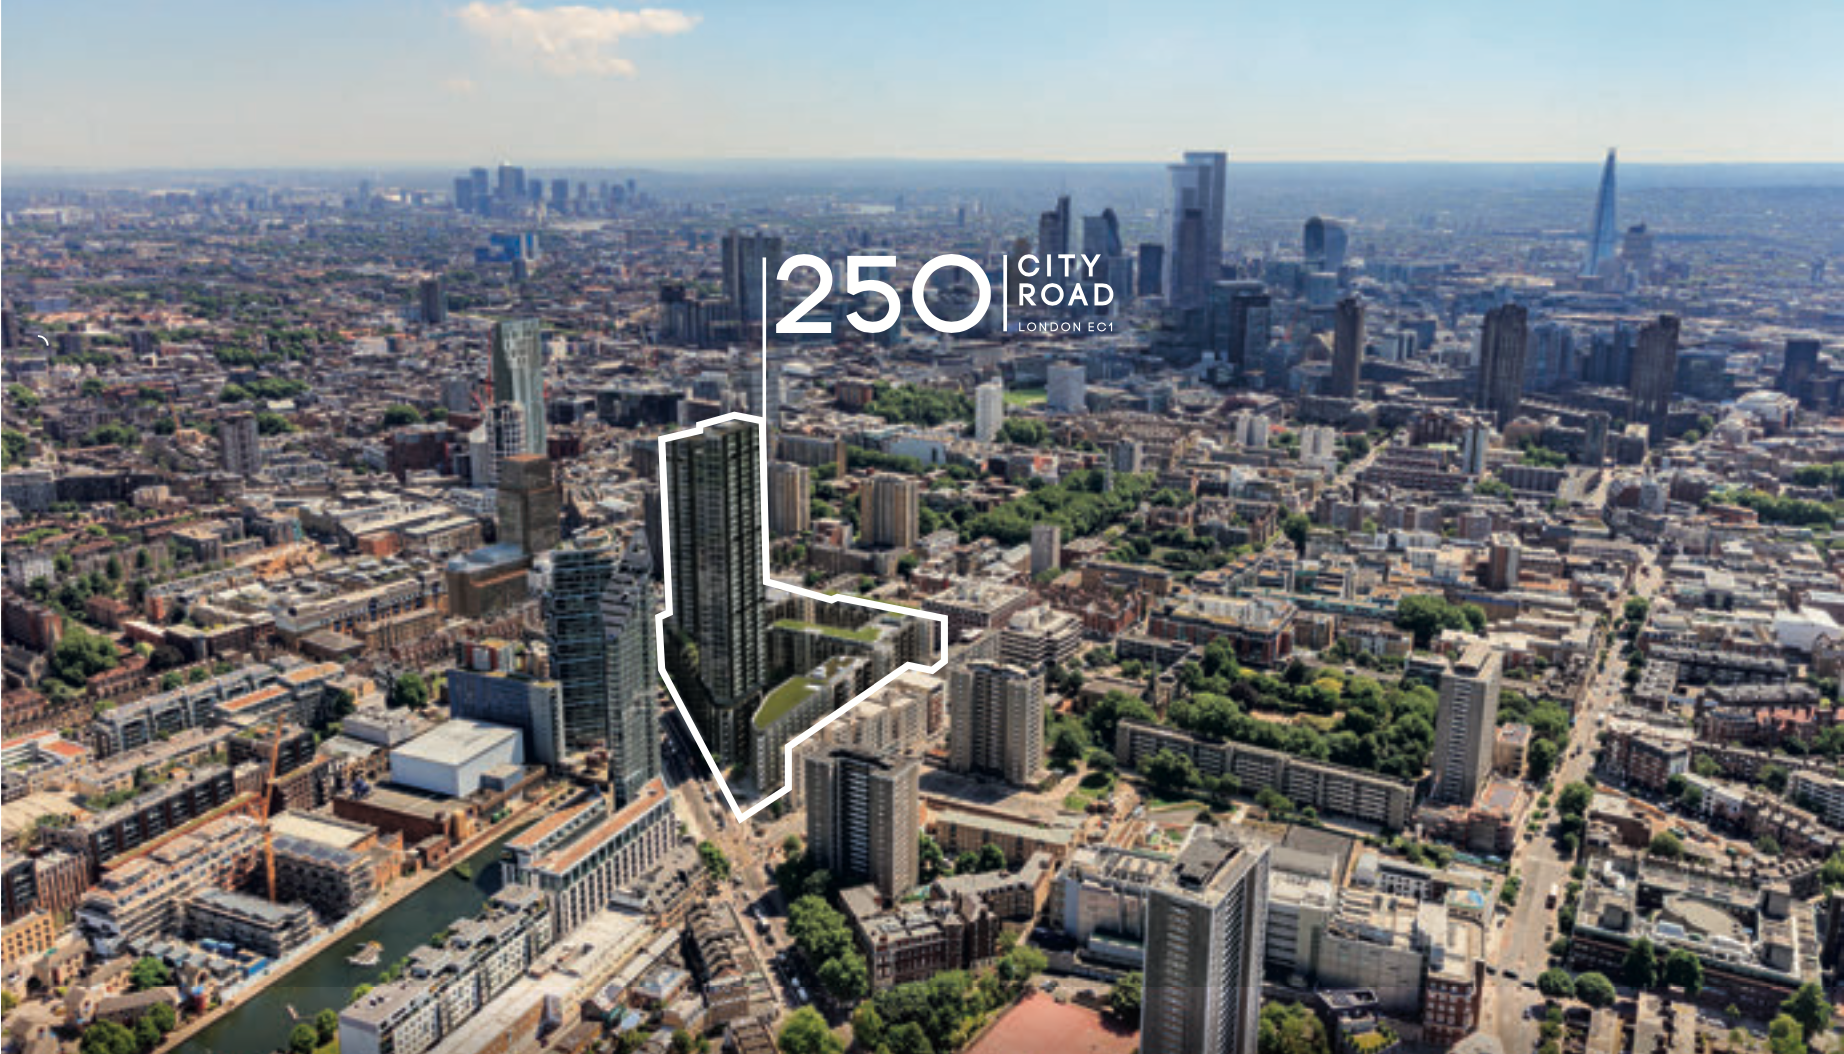 250-city-road-valencia-tower-berkeley-london-uk-zone-1-property-old-street-islington-jade-land-properties-hong-kong-real-estate-agency-倫敦-1區-英國-翡翠島物業